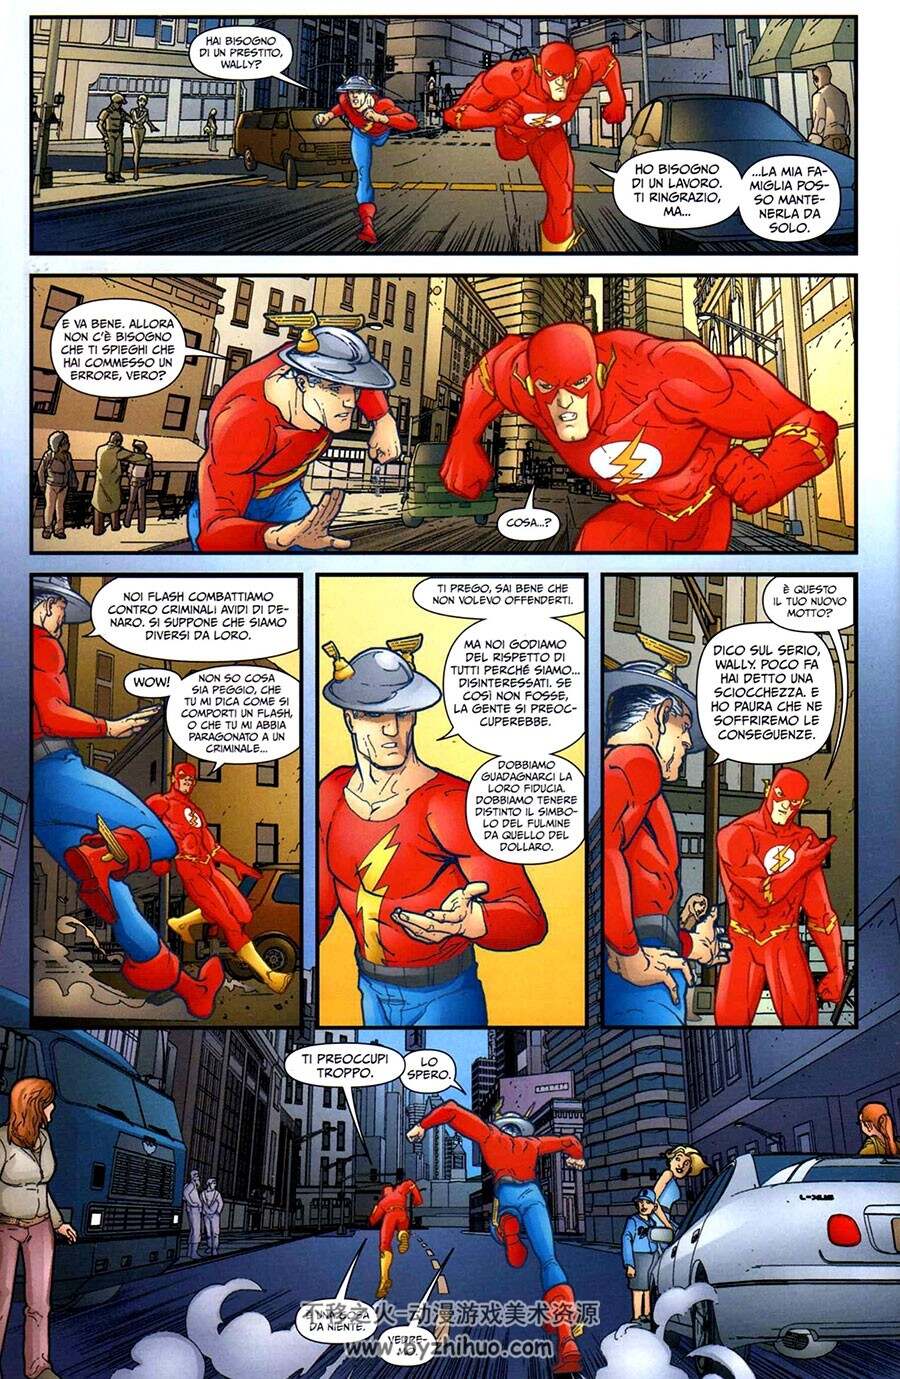 Flash - Soldi Veloci 第1册 意大利语版 美国DC超级英雄漫画